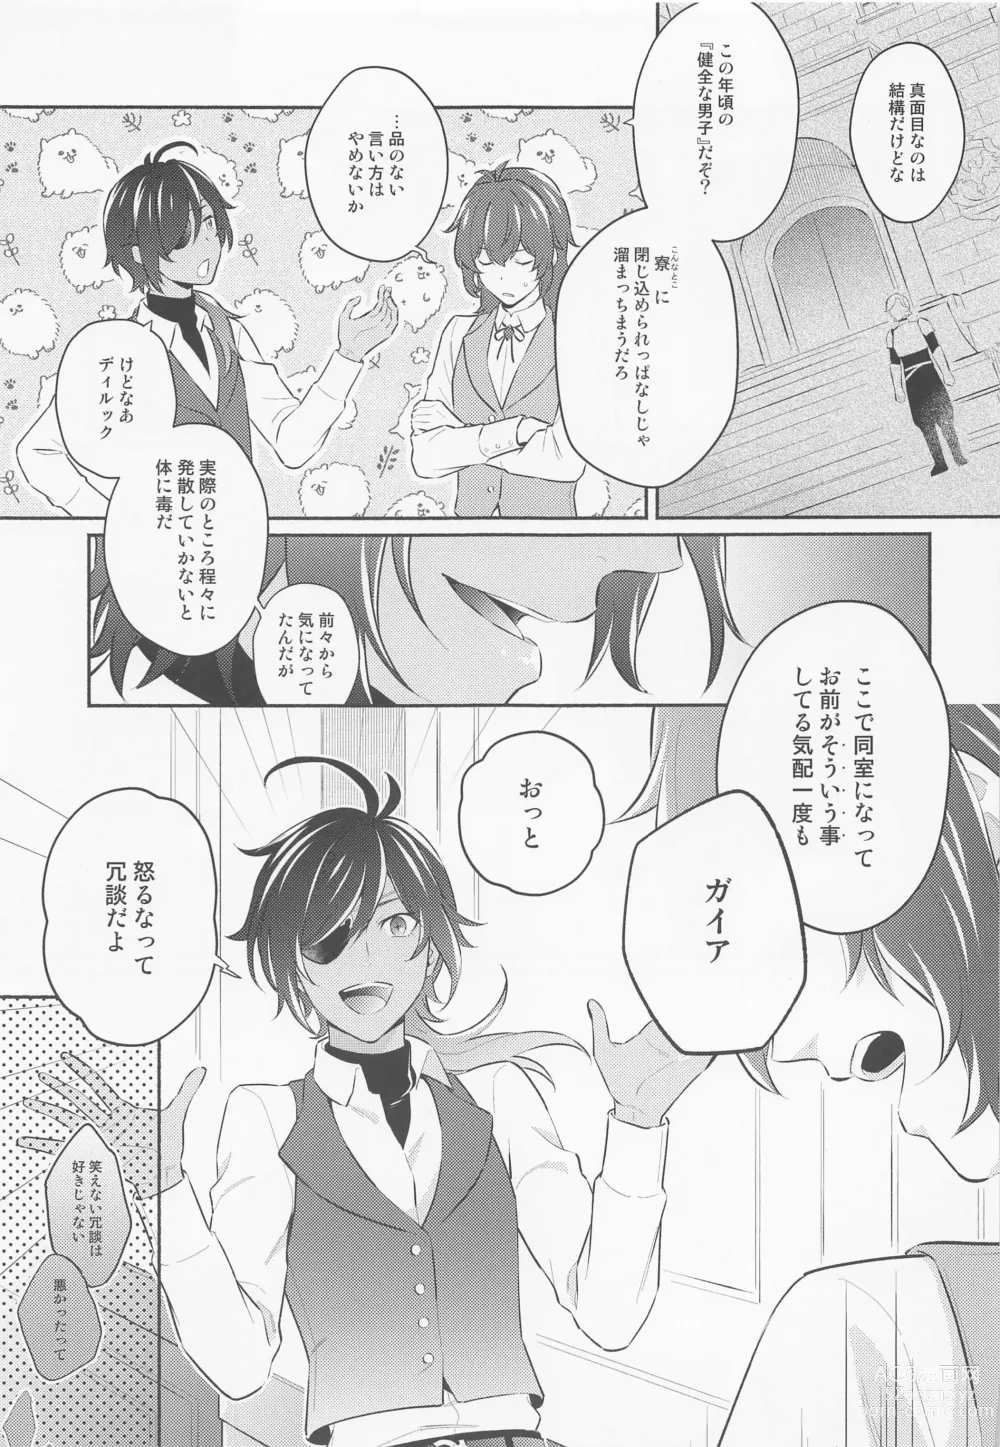 Page 10 of doujinshi Kimi to Yoake o